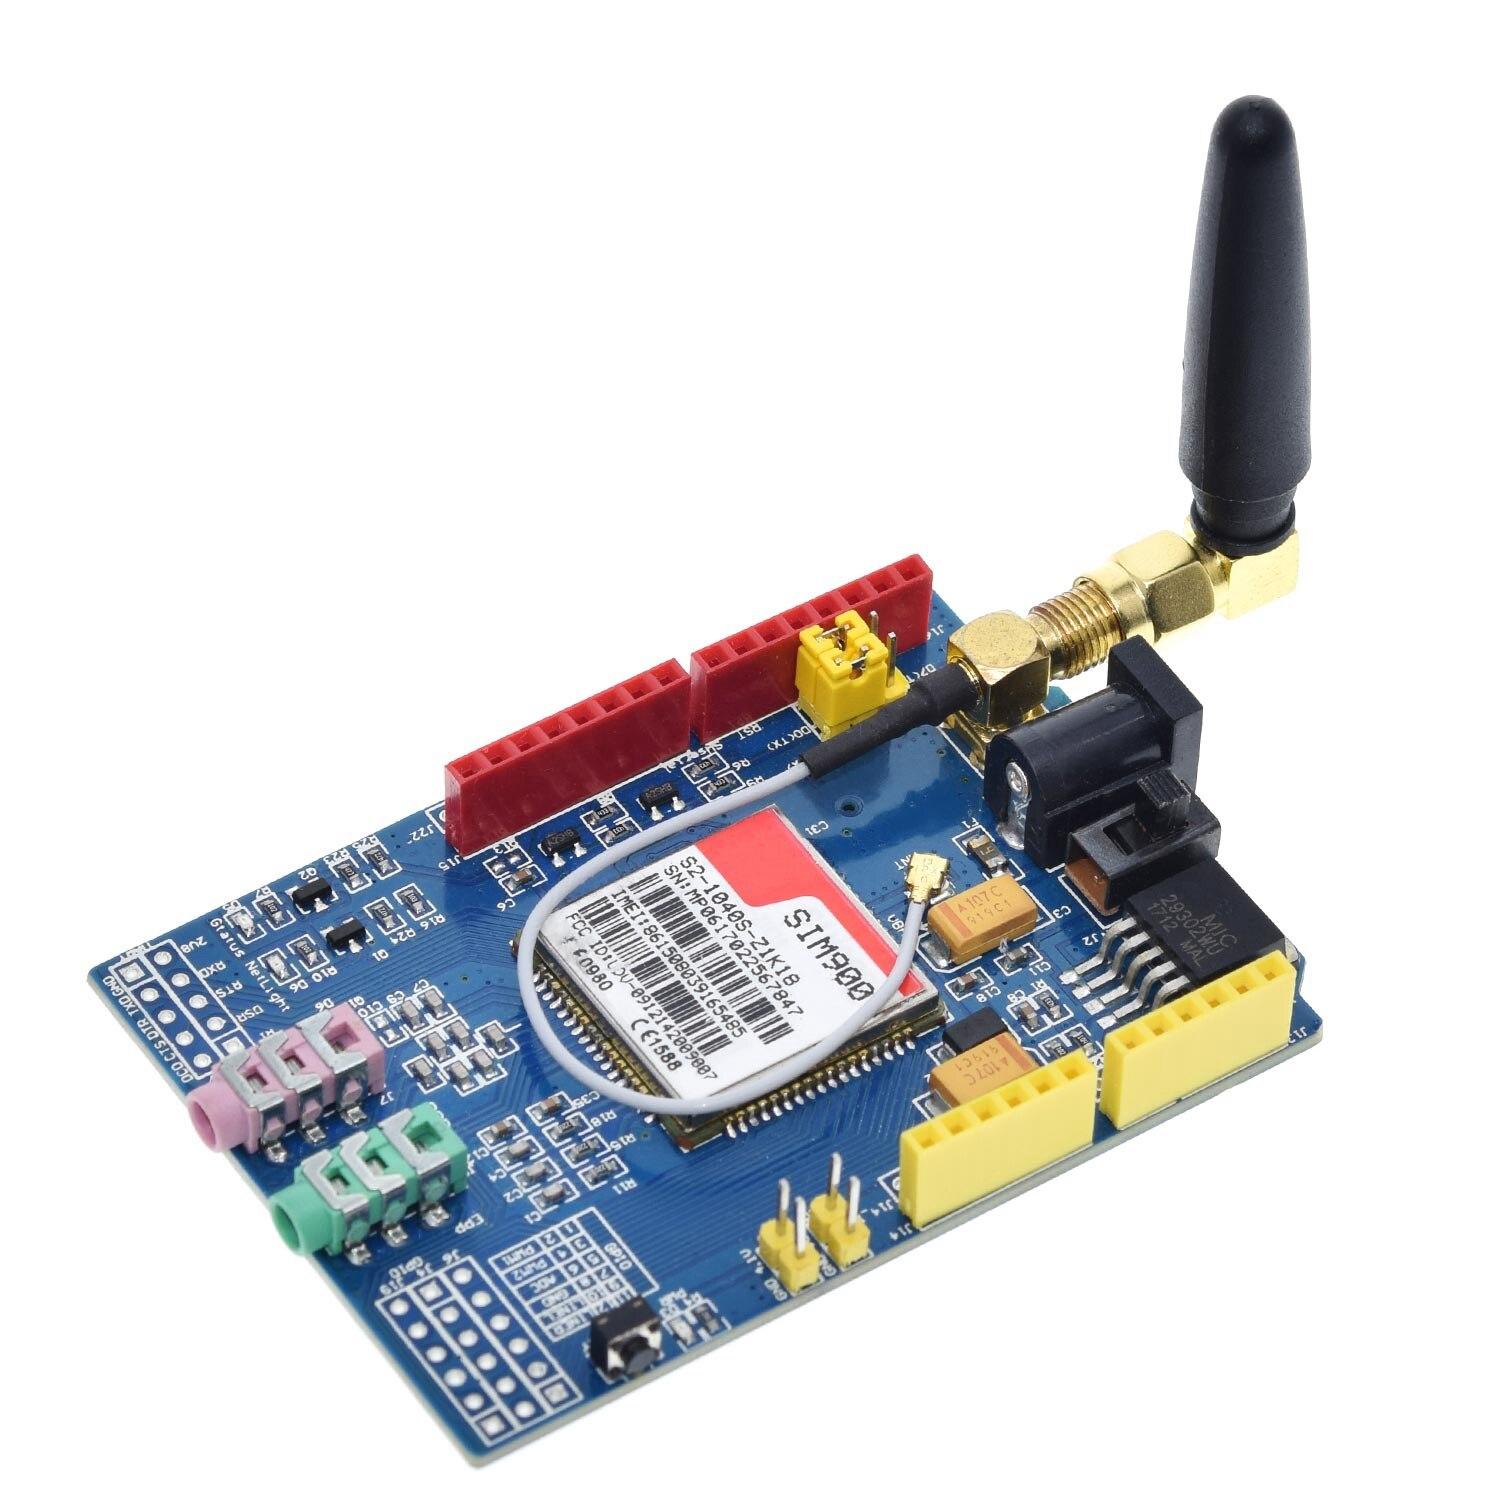 SIM900 850/900/1800/1900 MHz GPRS/GSM Development Board Module Kit For Arduino